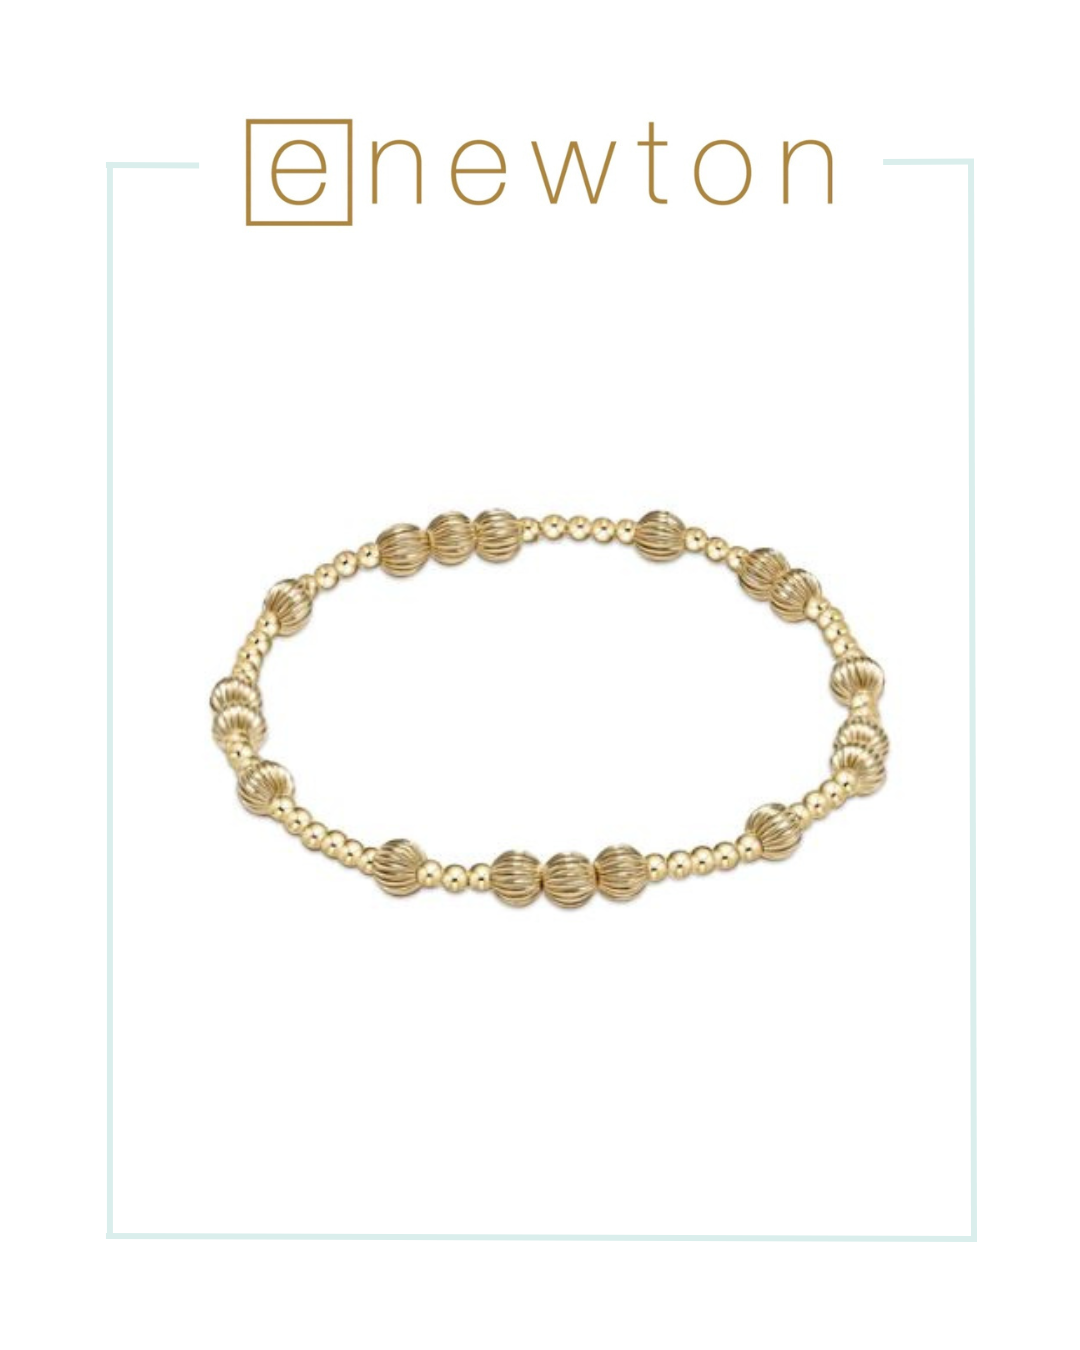 E Newton Hope Unwritten Dignity 5mm Bead Bracelet - Gold-Bracelets-ENEWTON-The Village Shoppe, Women’s Fashion Boutique, Shop Online and In Store - Located in Muscle Shoals, AL.